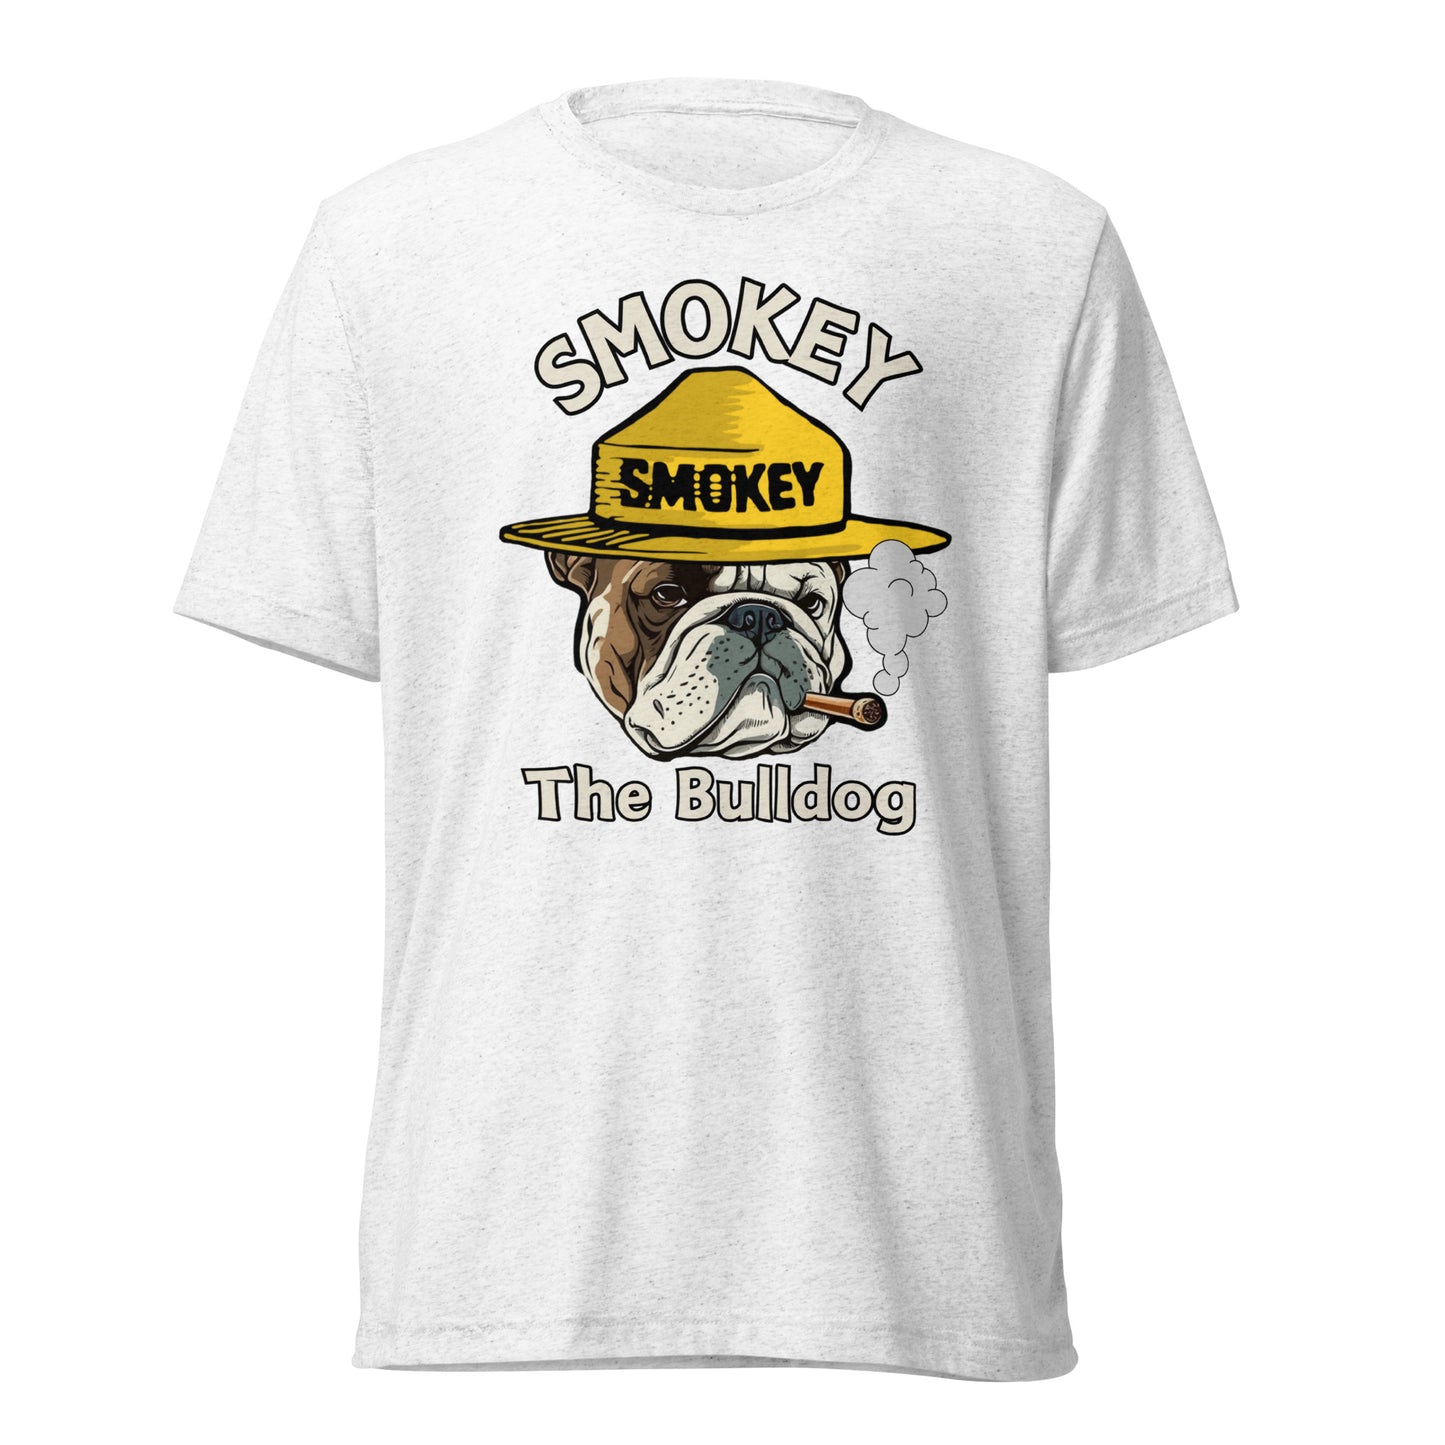 Smokey the Bulldog Short sleeve t-shirt